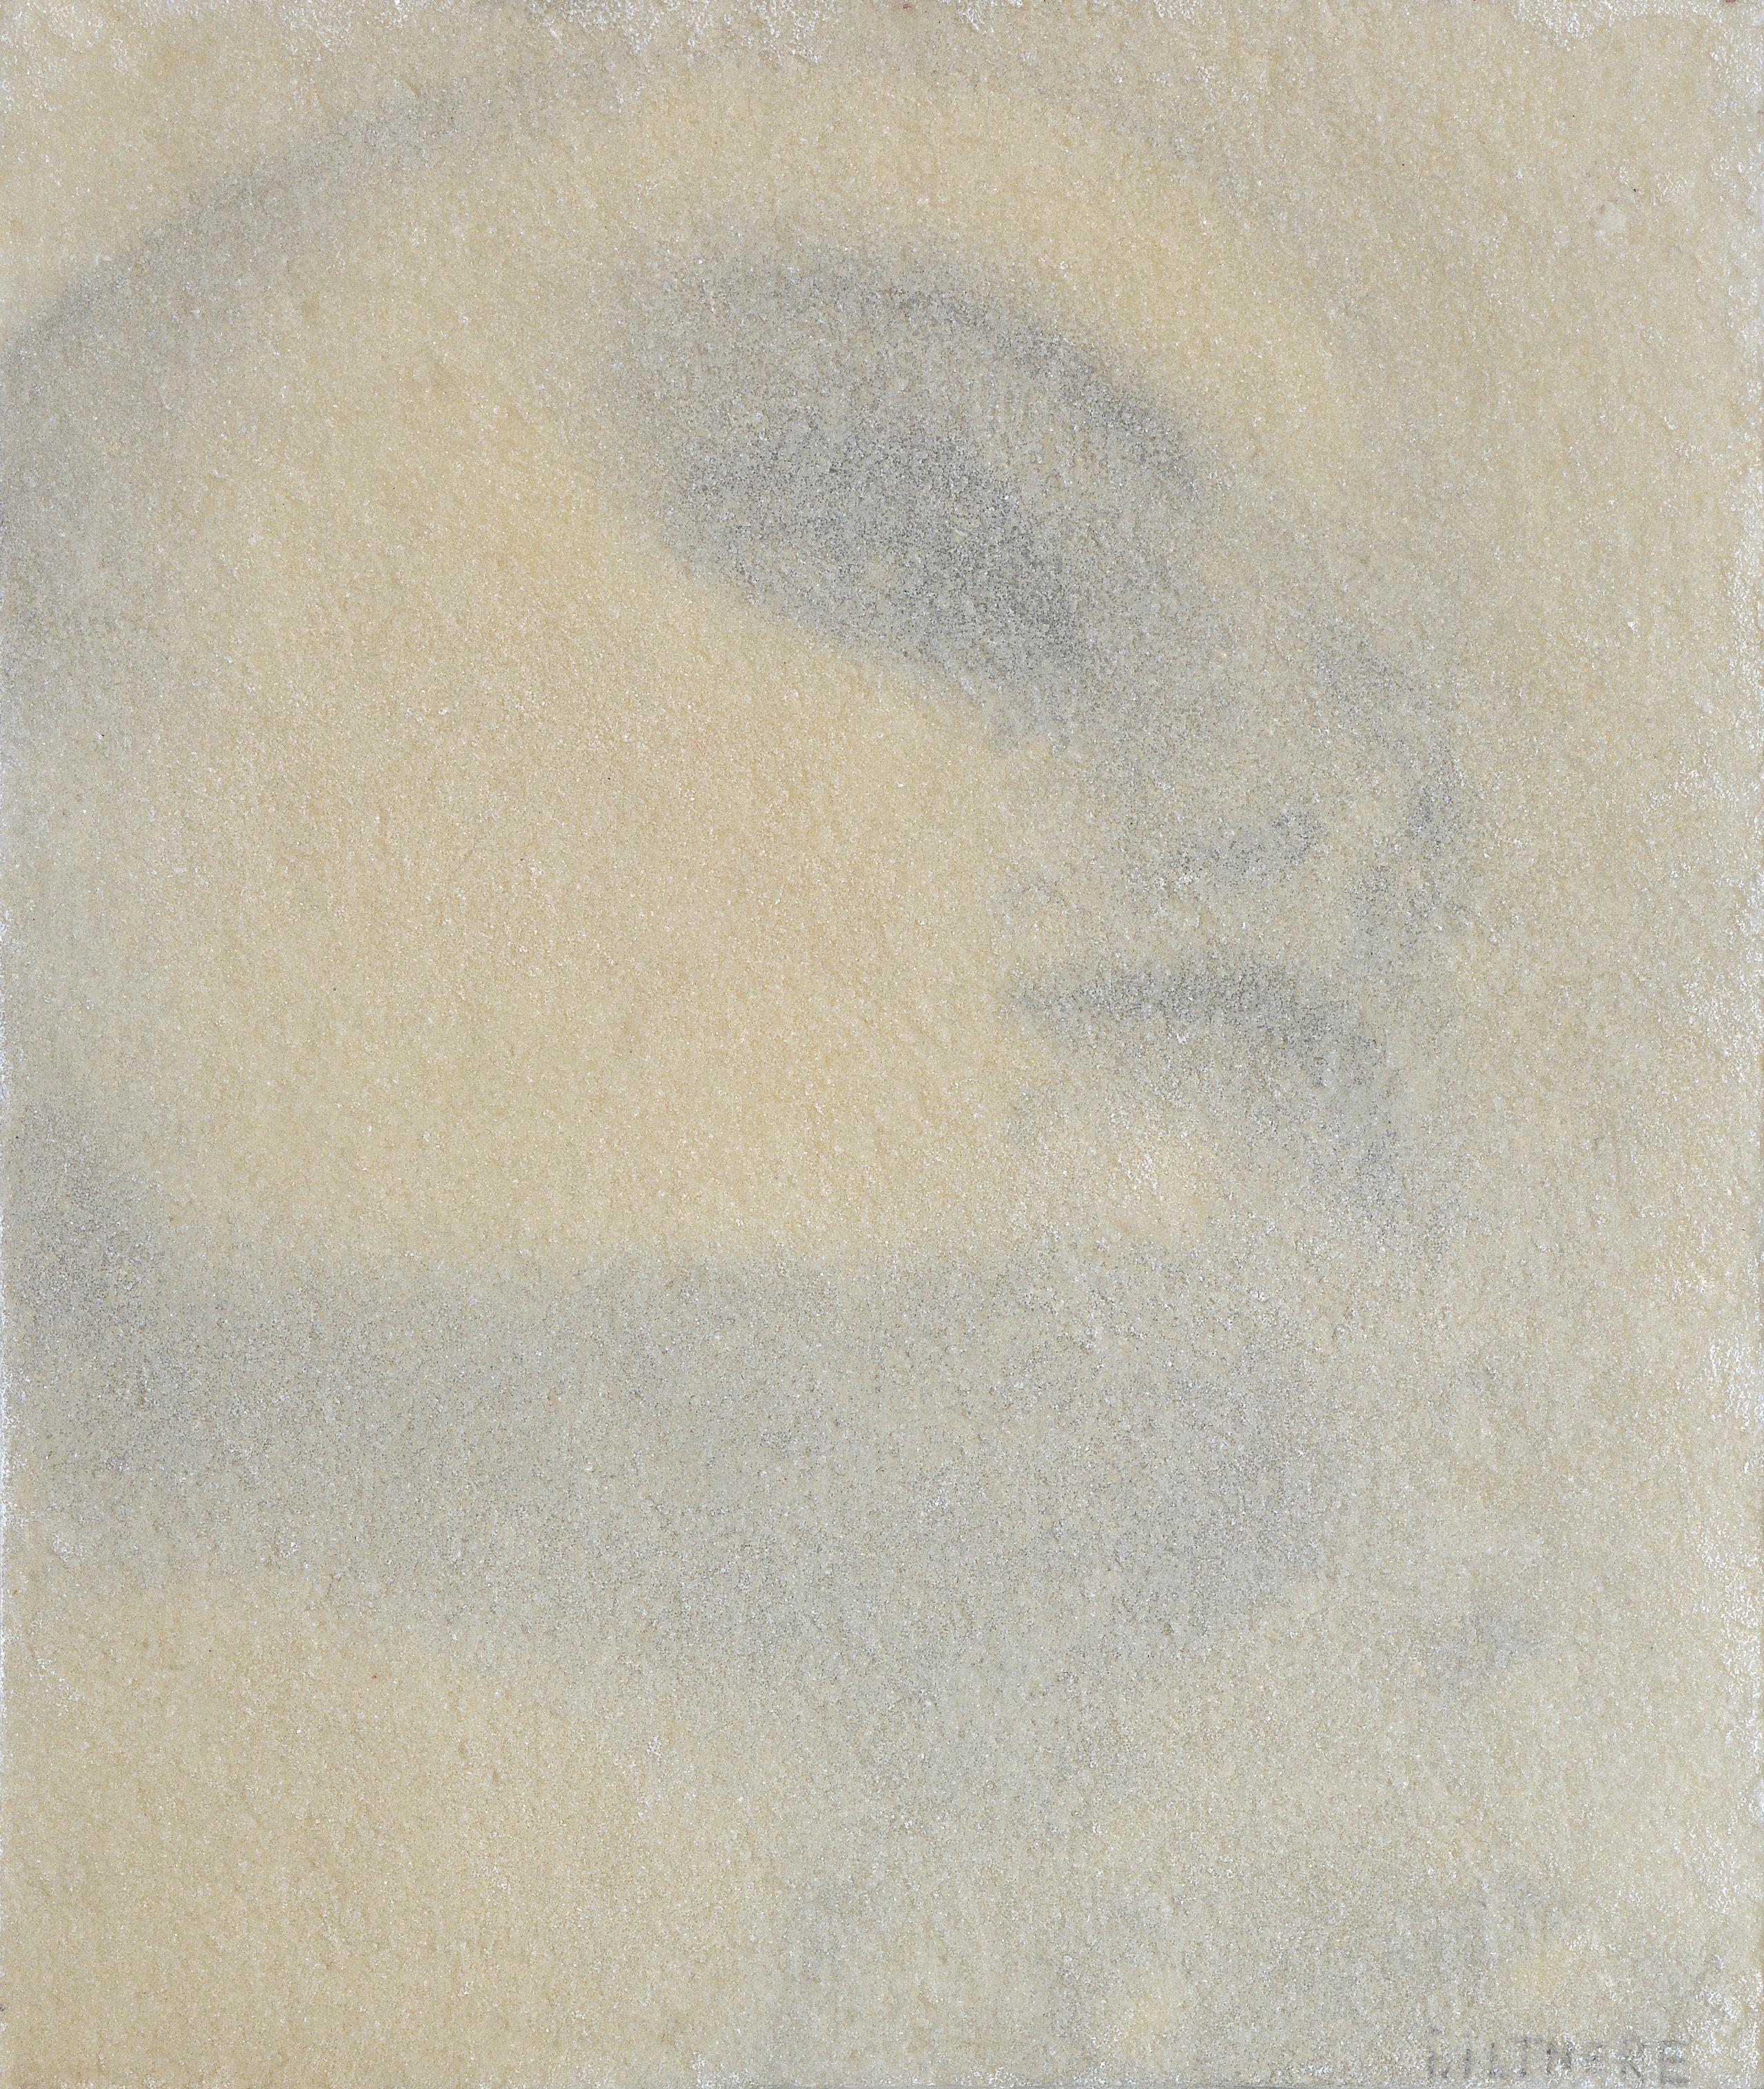 Ieva Iltnere Portrait Painting - Fresco. 2001, canvas, mixed media, 46x38 cm